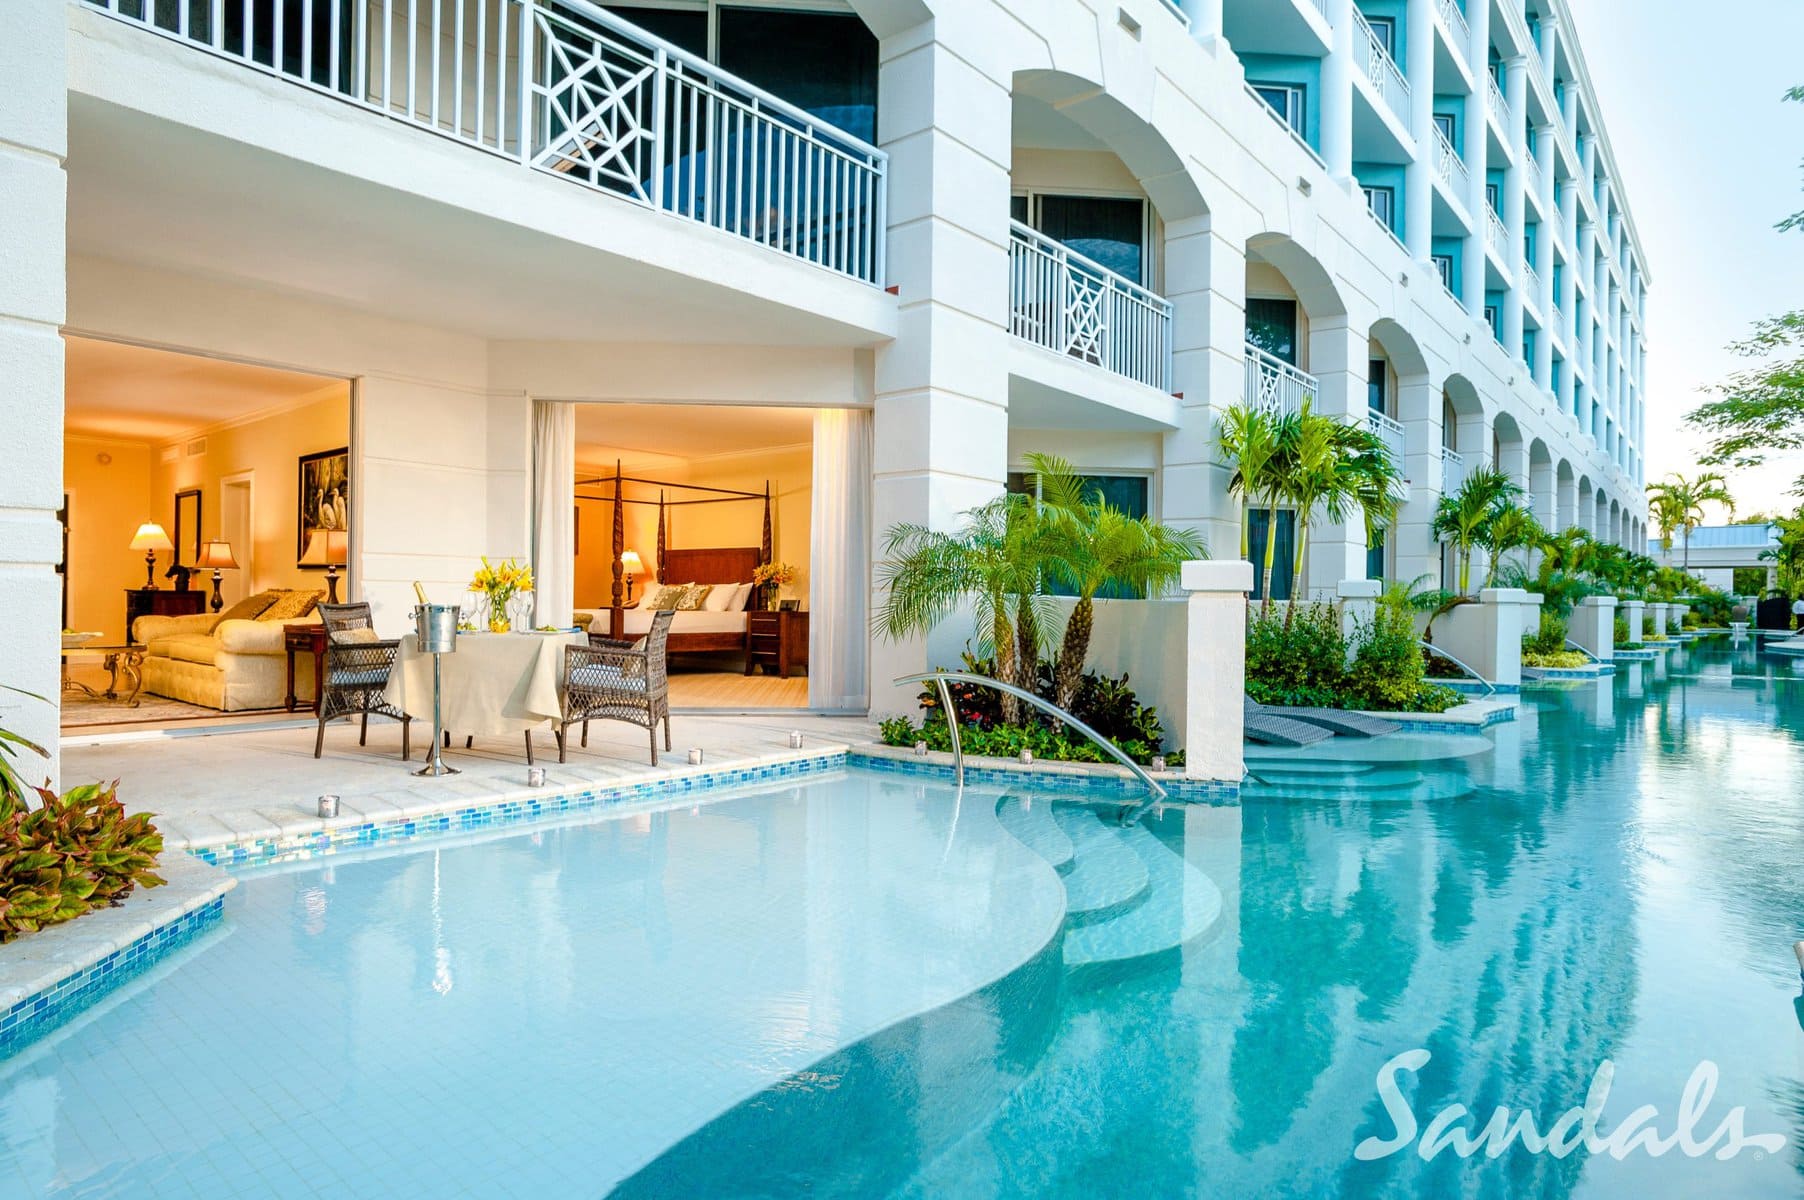 Sandals Resort Bahamas - Room Swim up suite